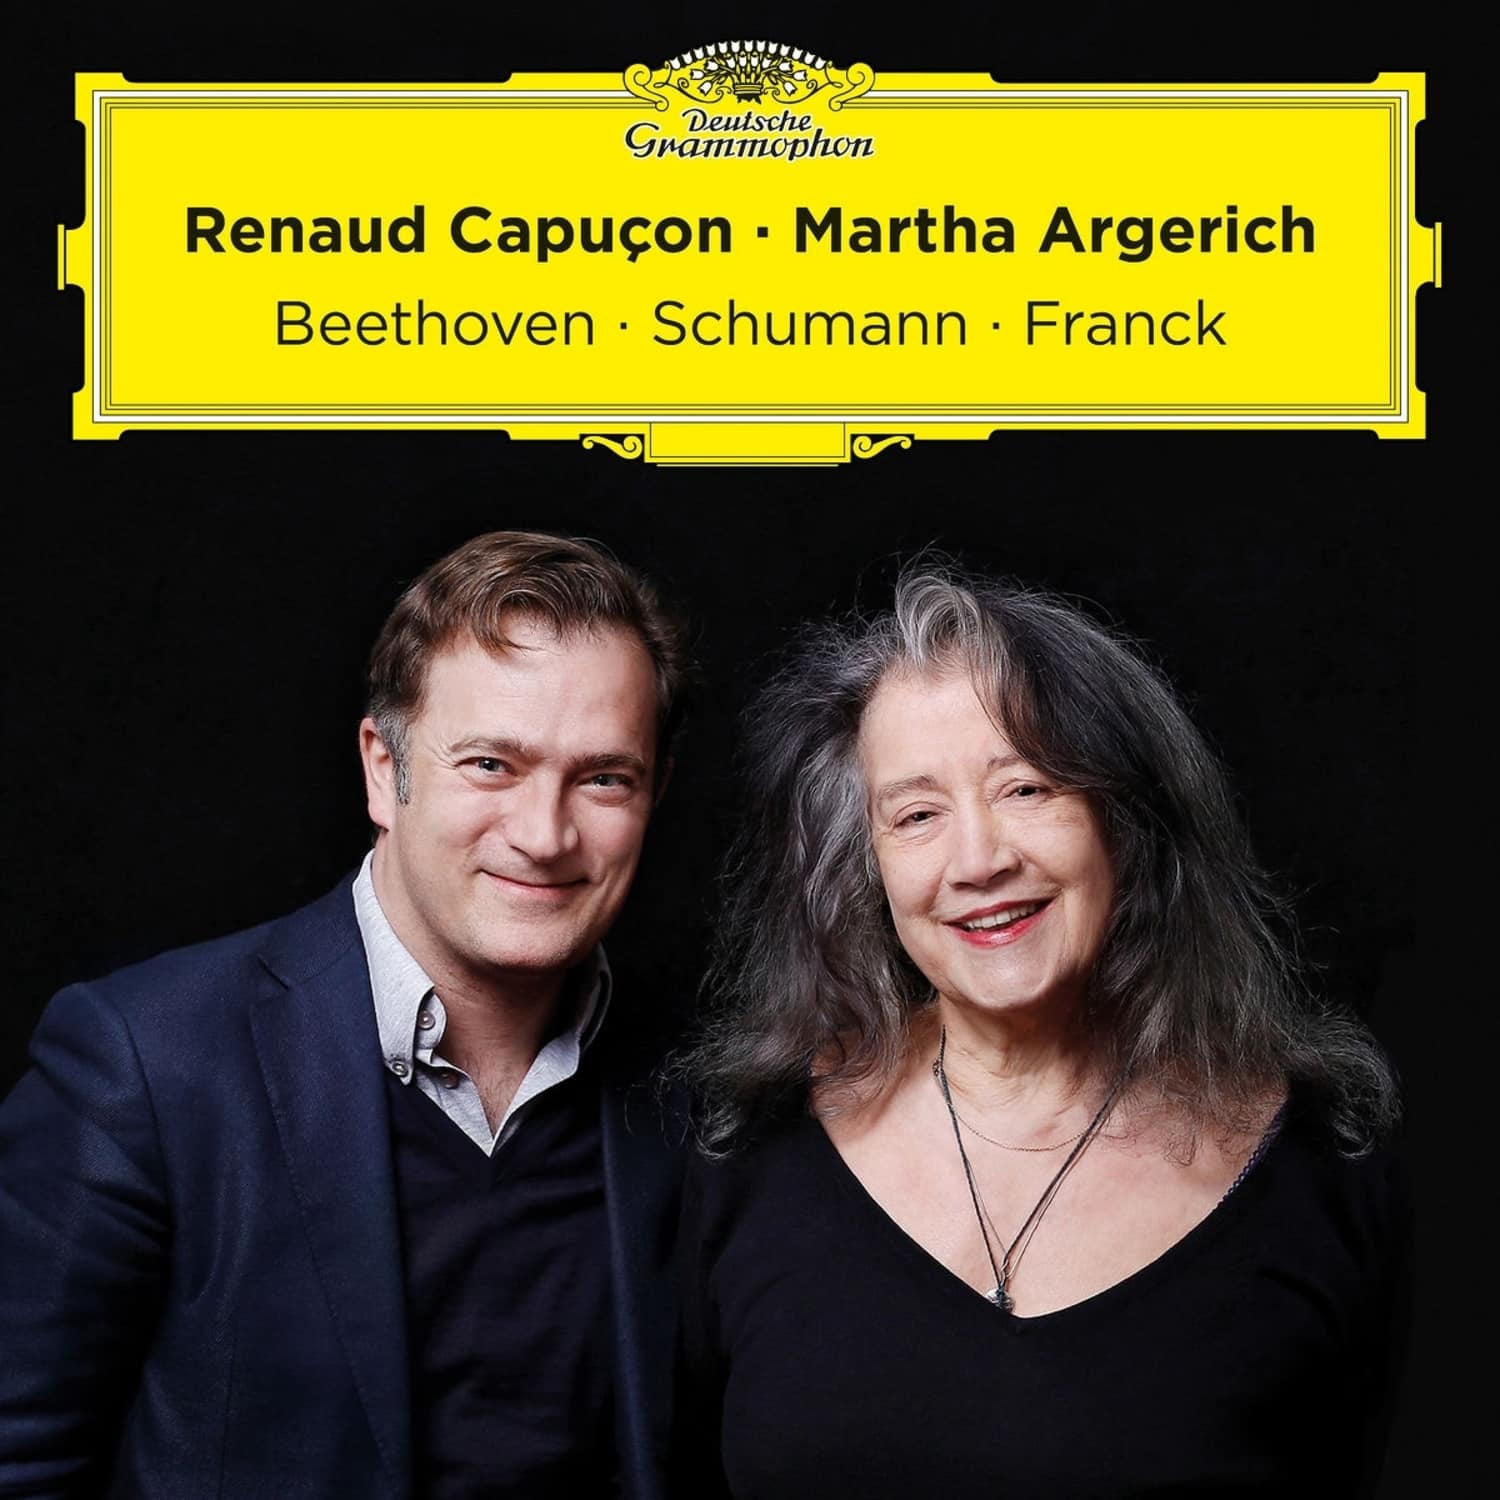  Renaud Capucon / Martha Argerich - BEETHOVEN-SCHUMANN-FRANCK 